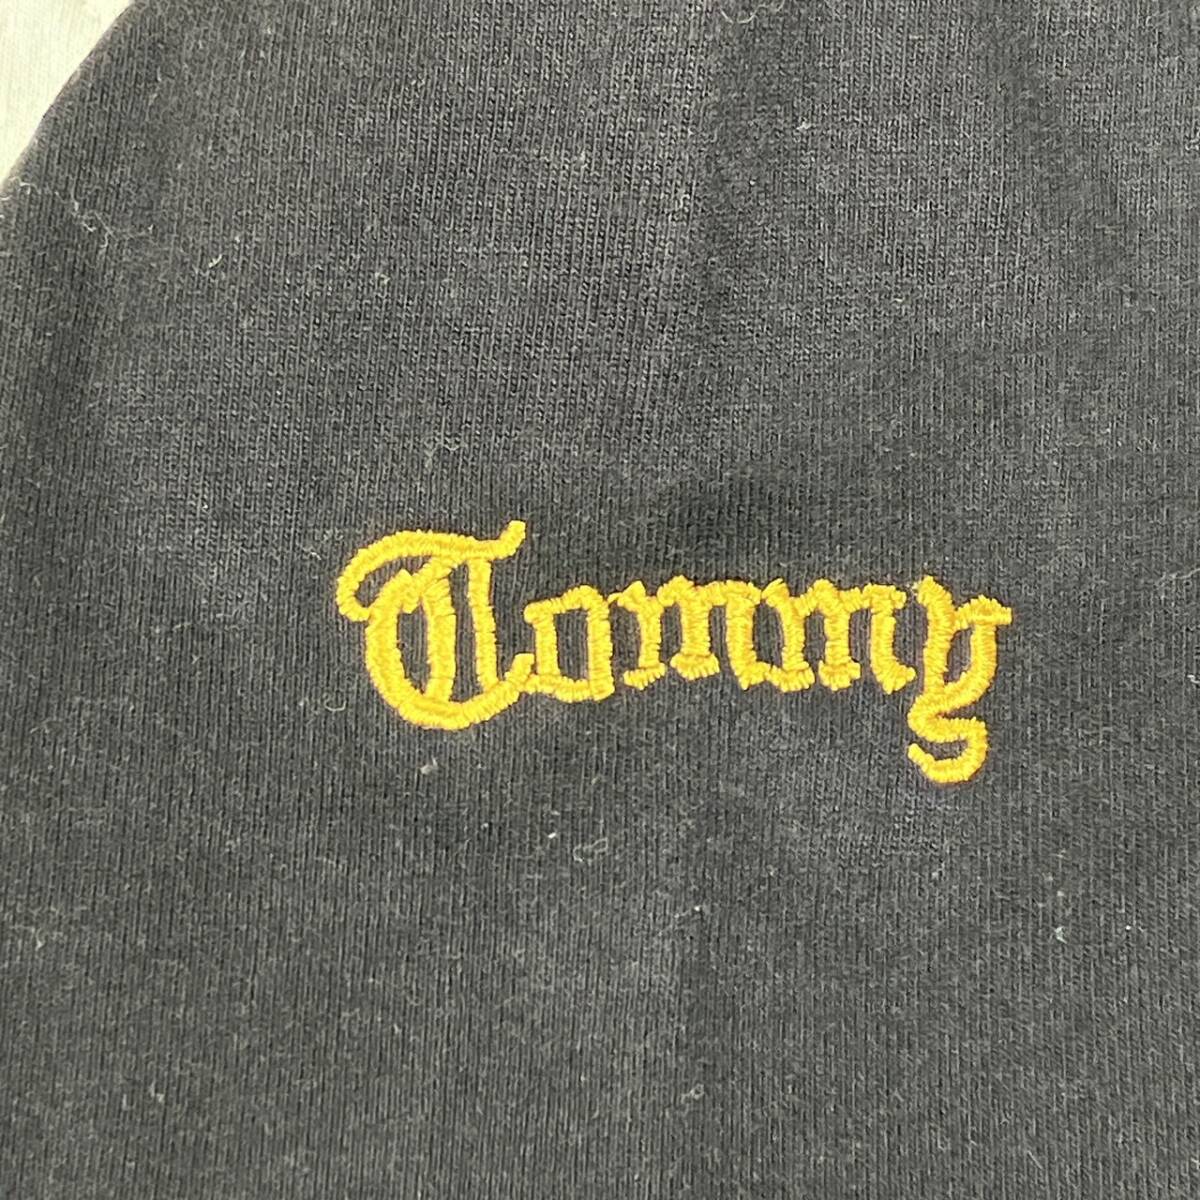 L TOMMY ESTABLISHED 1985 Tシャツ オフホワイト/白/ブラック/パープル/黒/紫 長袖 リユース ultraｍto ts2012の画像6